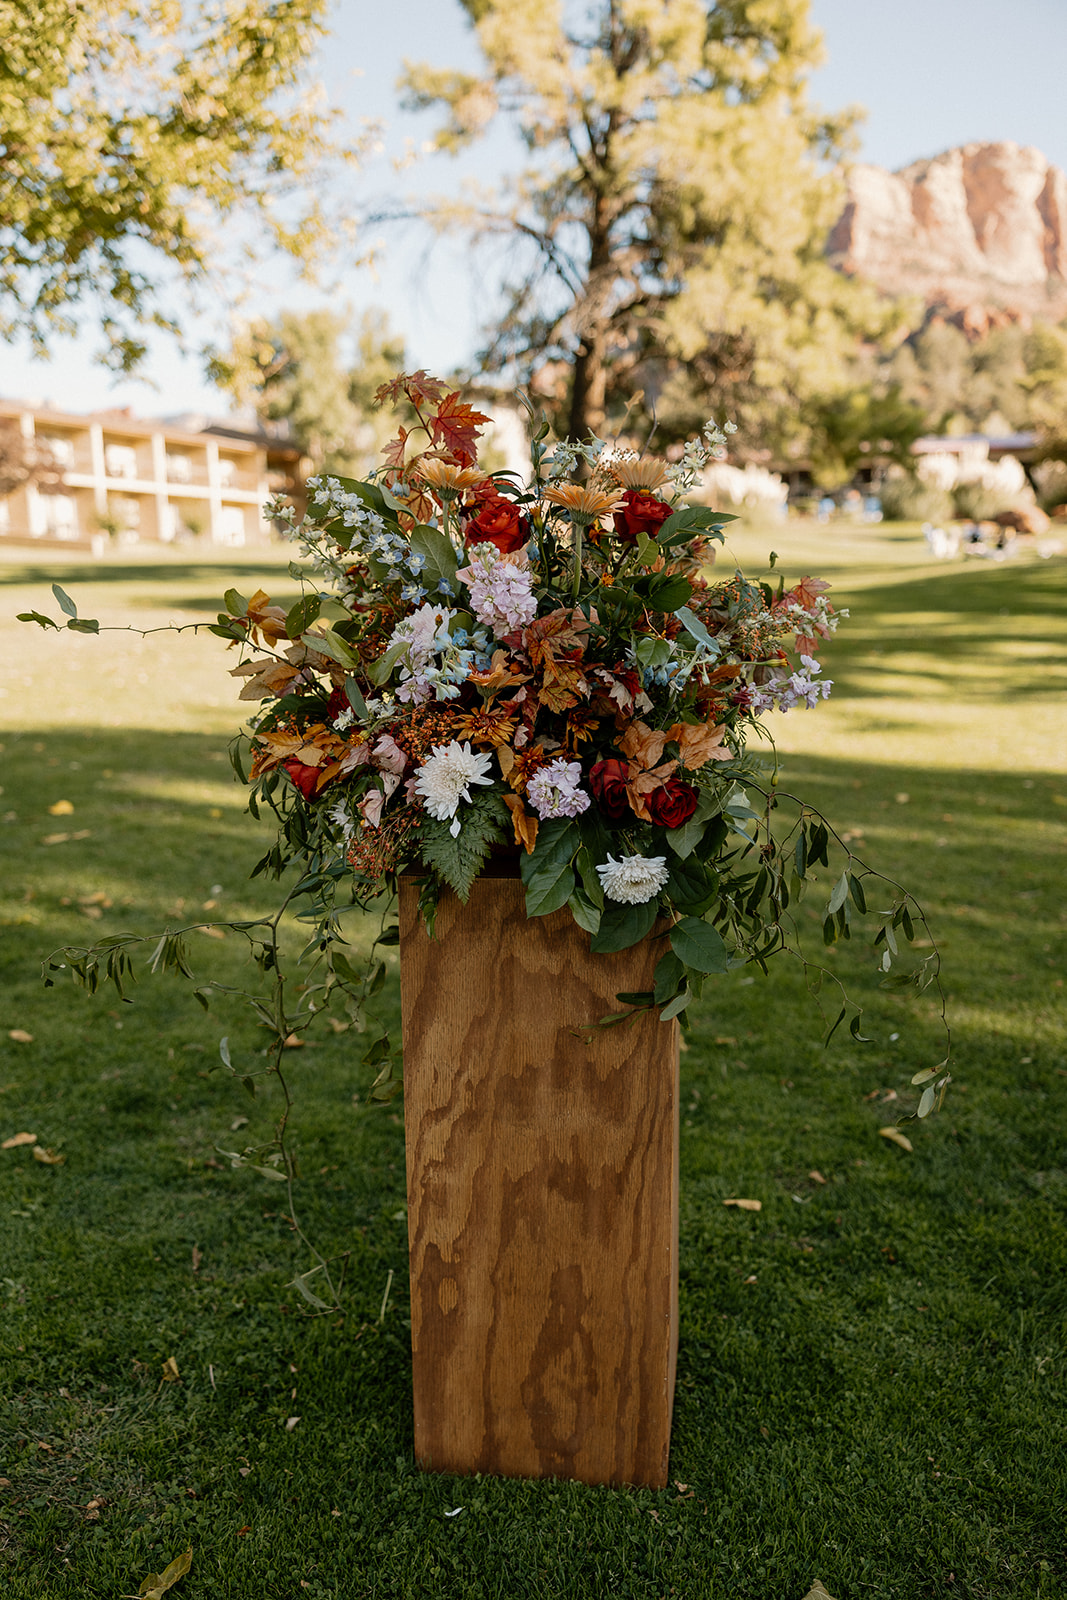 Wedding florals set up for the dreamy Arizona wedding ceremony